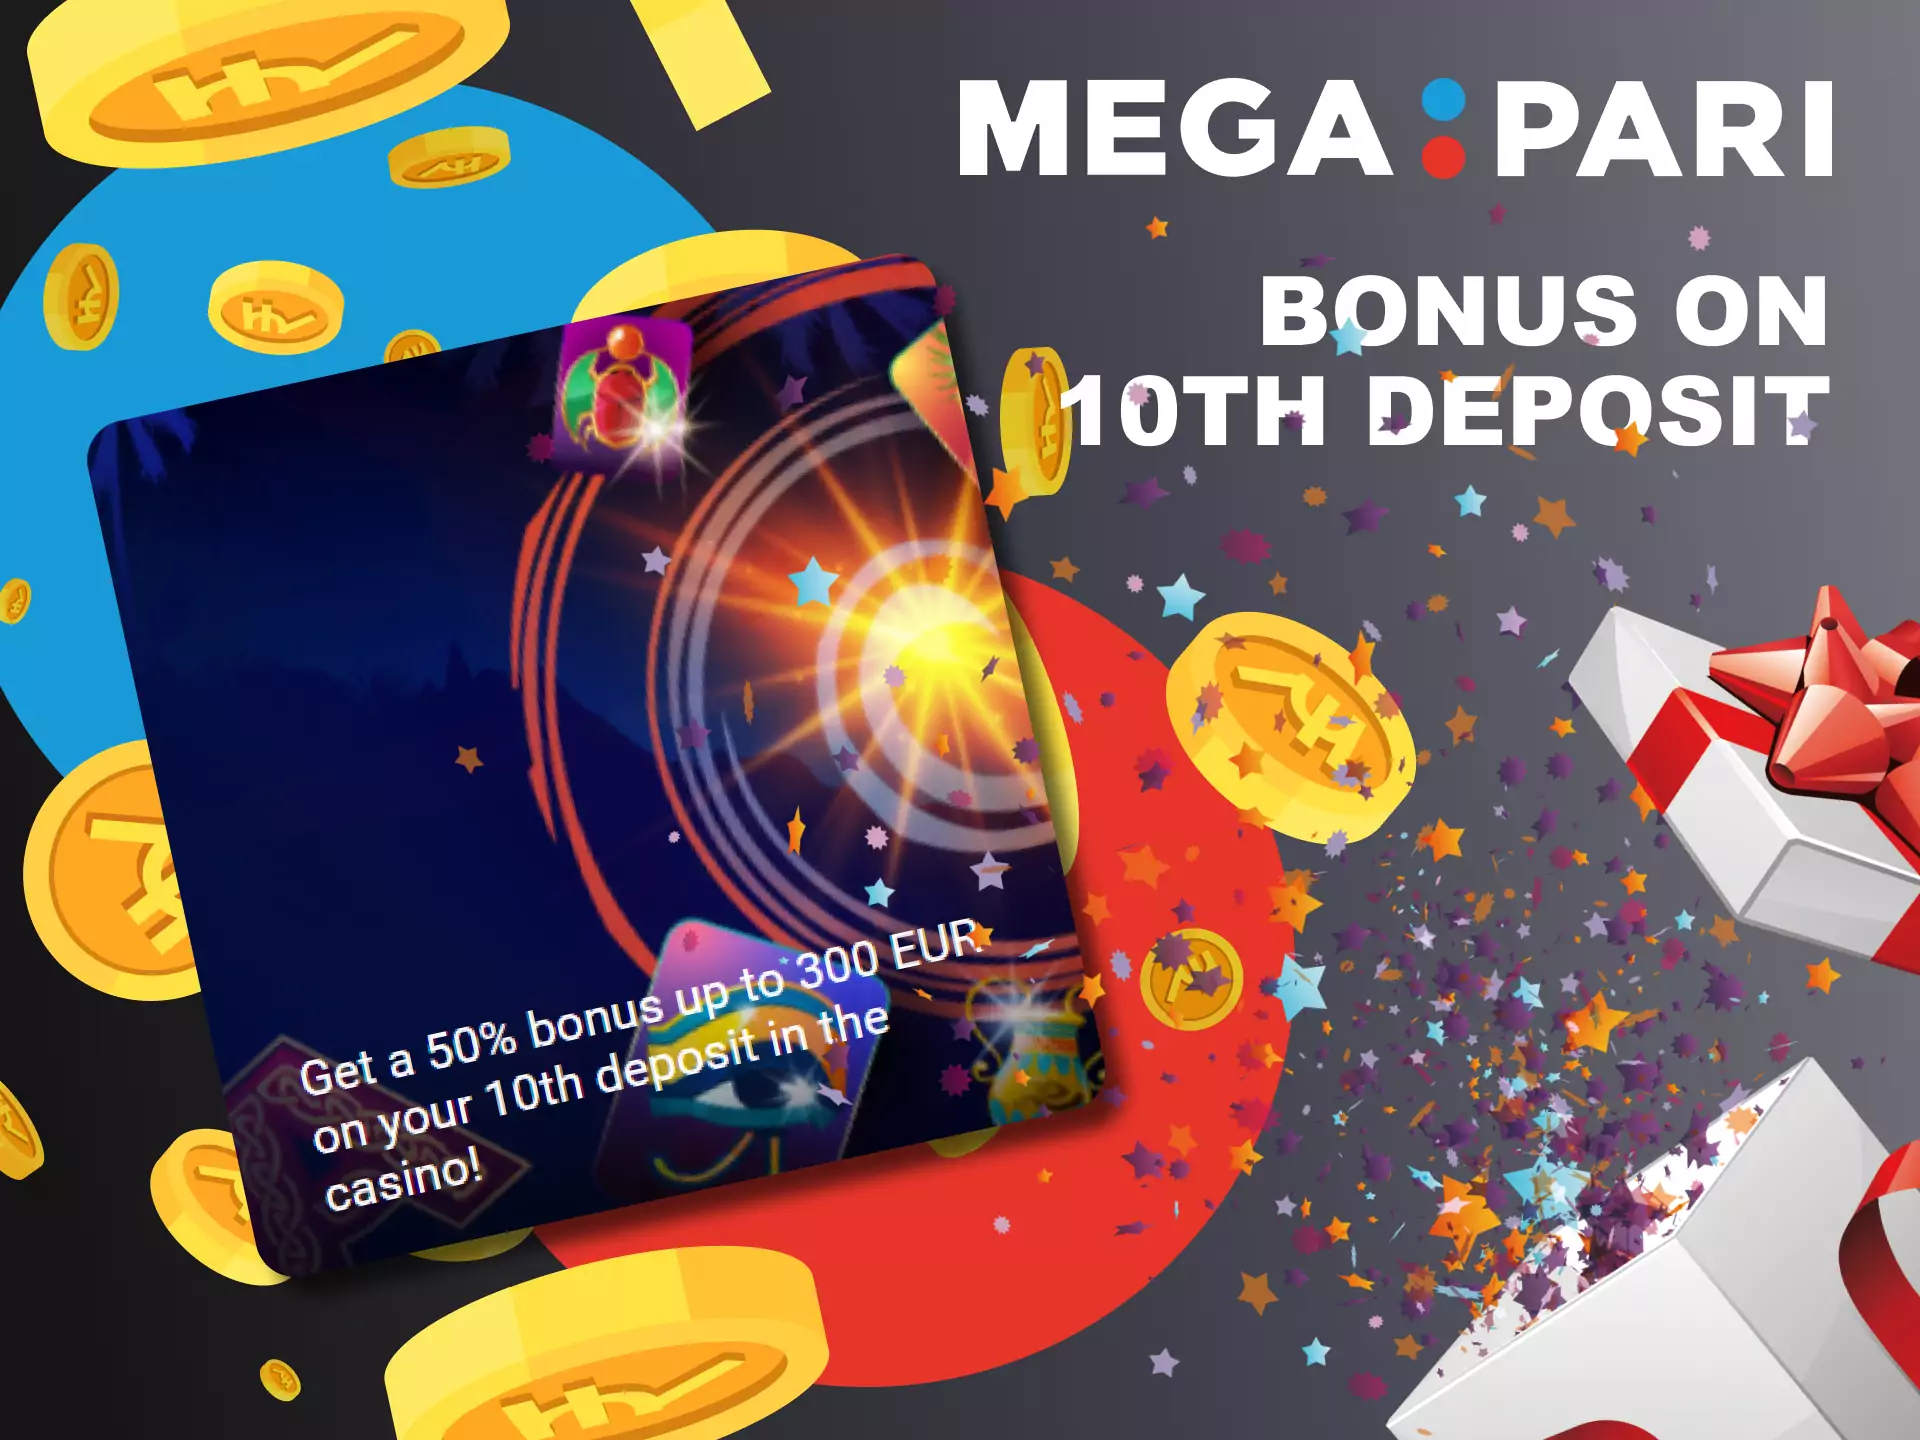 The Megapari app has a bonus on the 10th deposit.